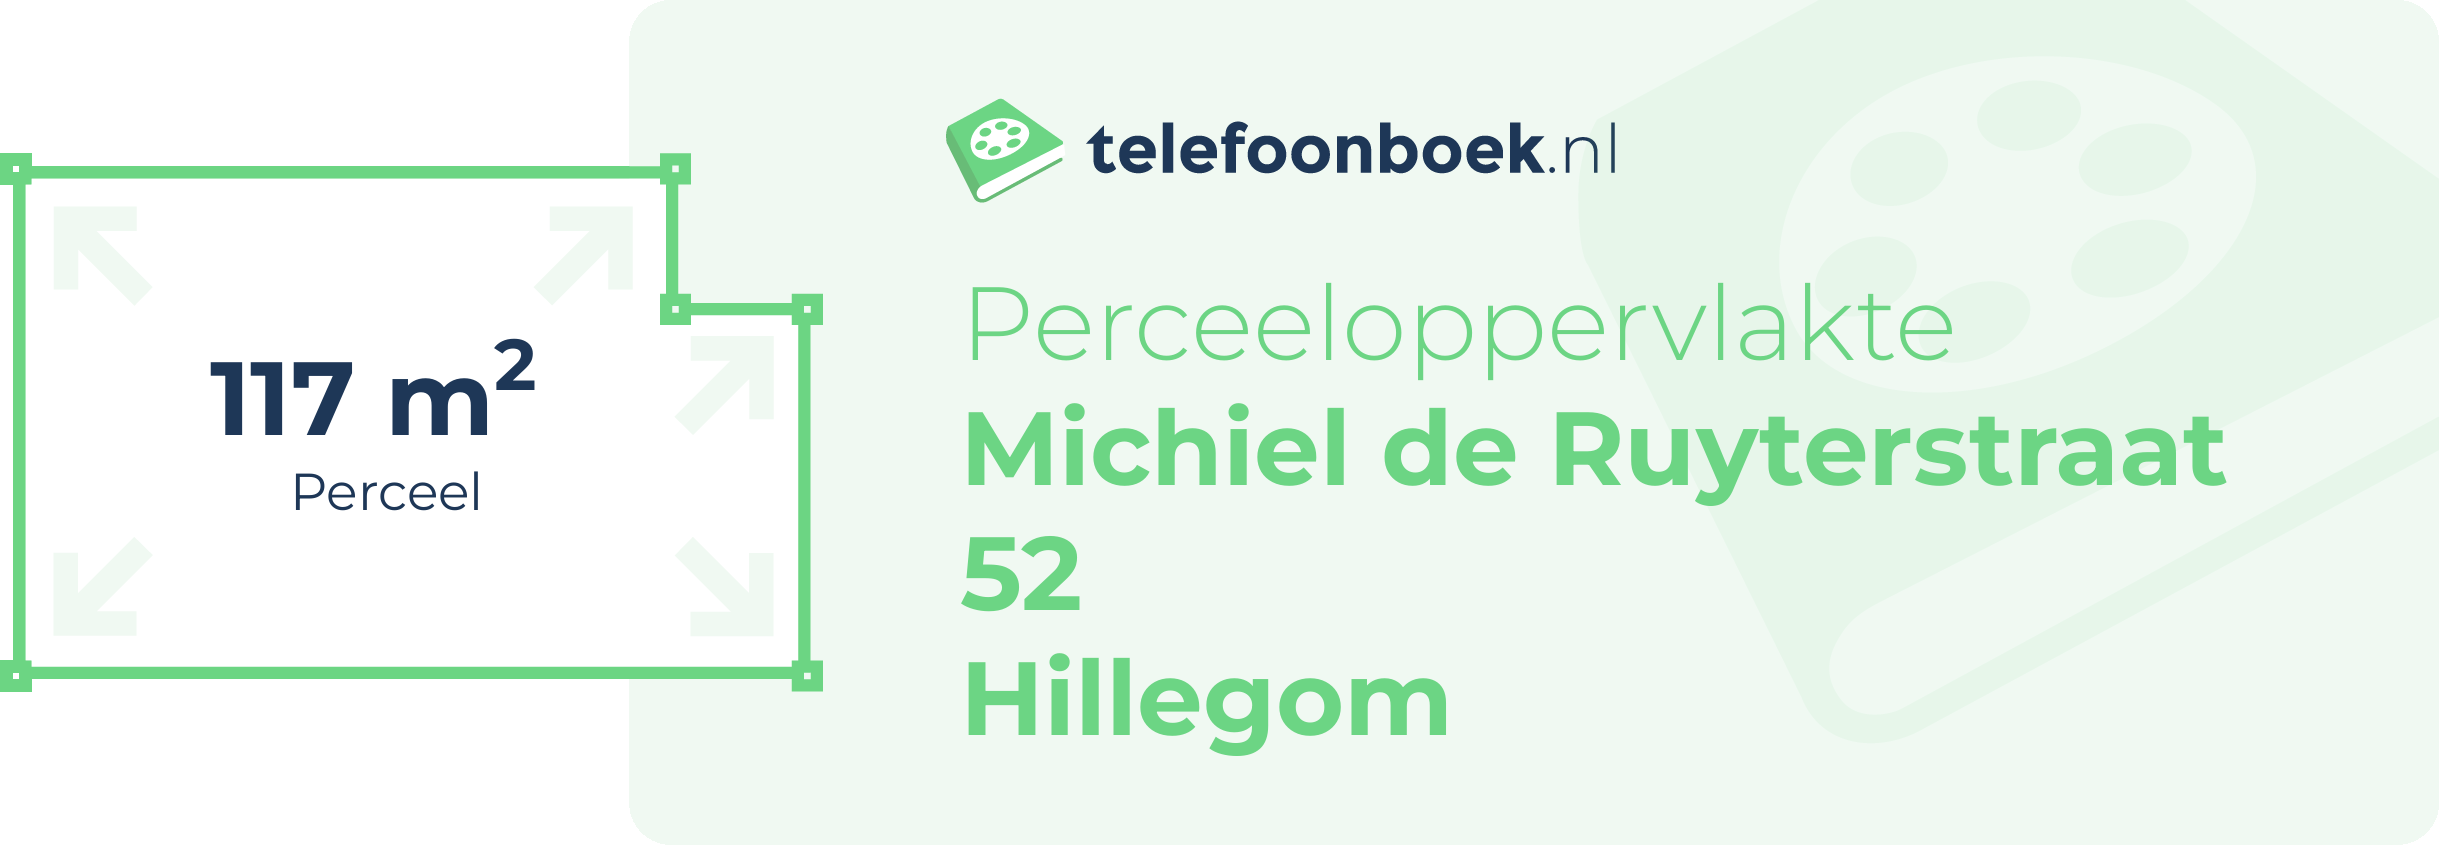 Perceeloppervlakte Michiel De Ruyterstraat 52 Hillegom